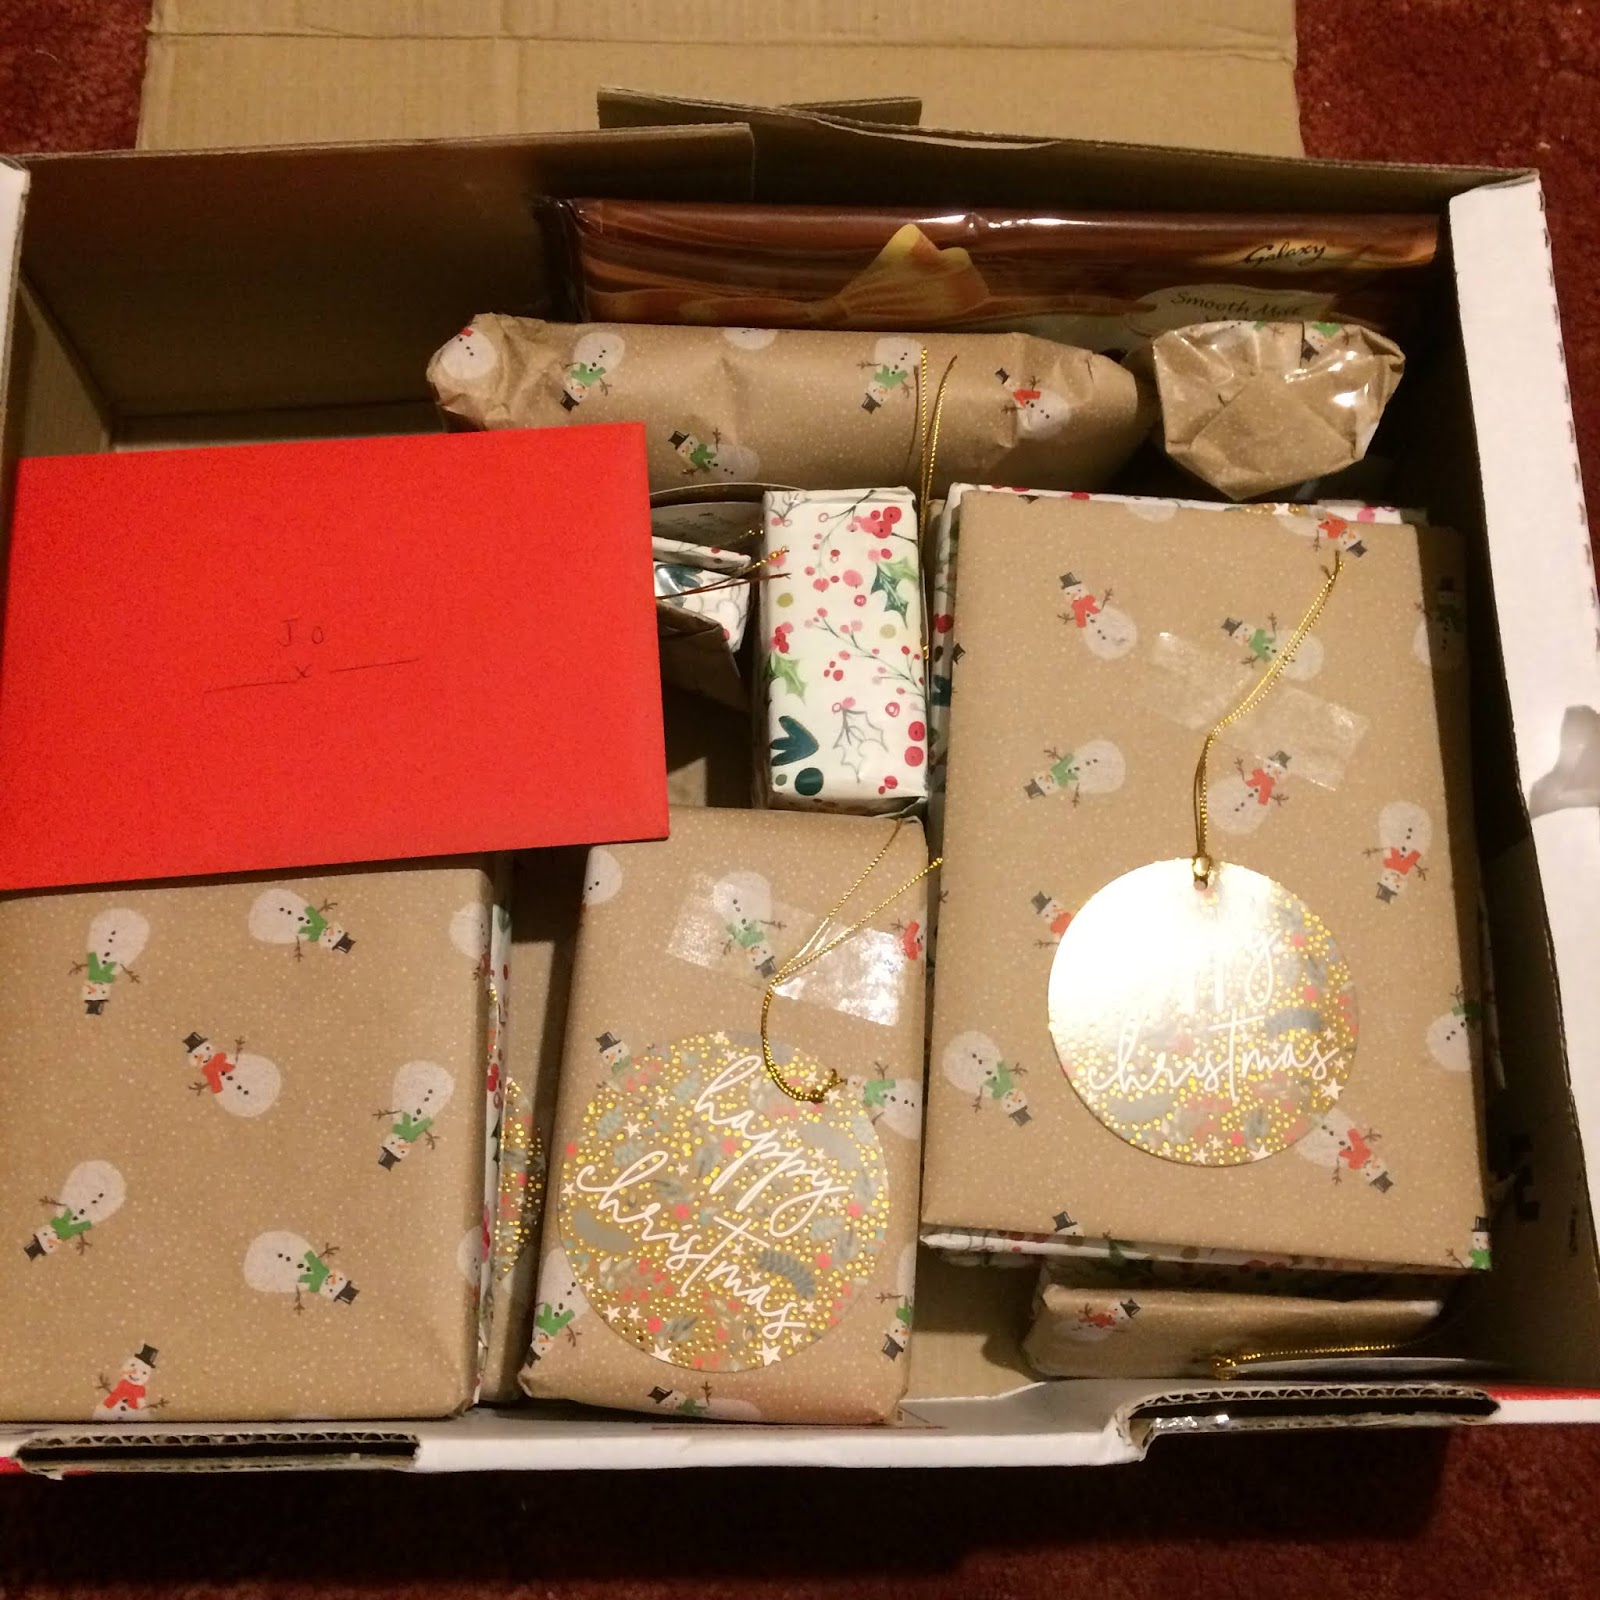 A parcel box full of presents